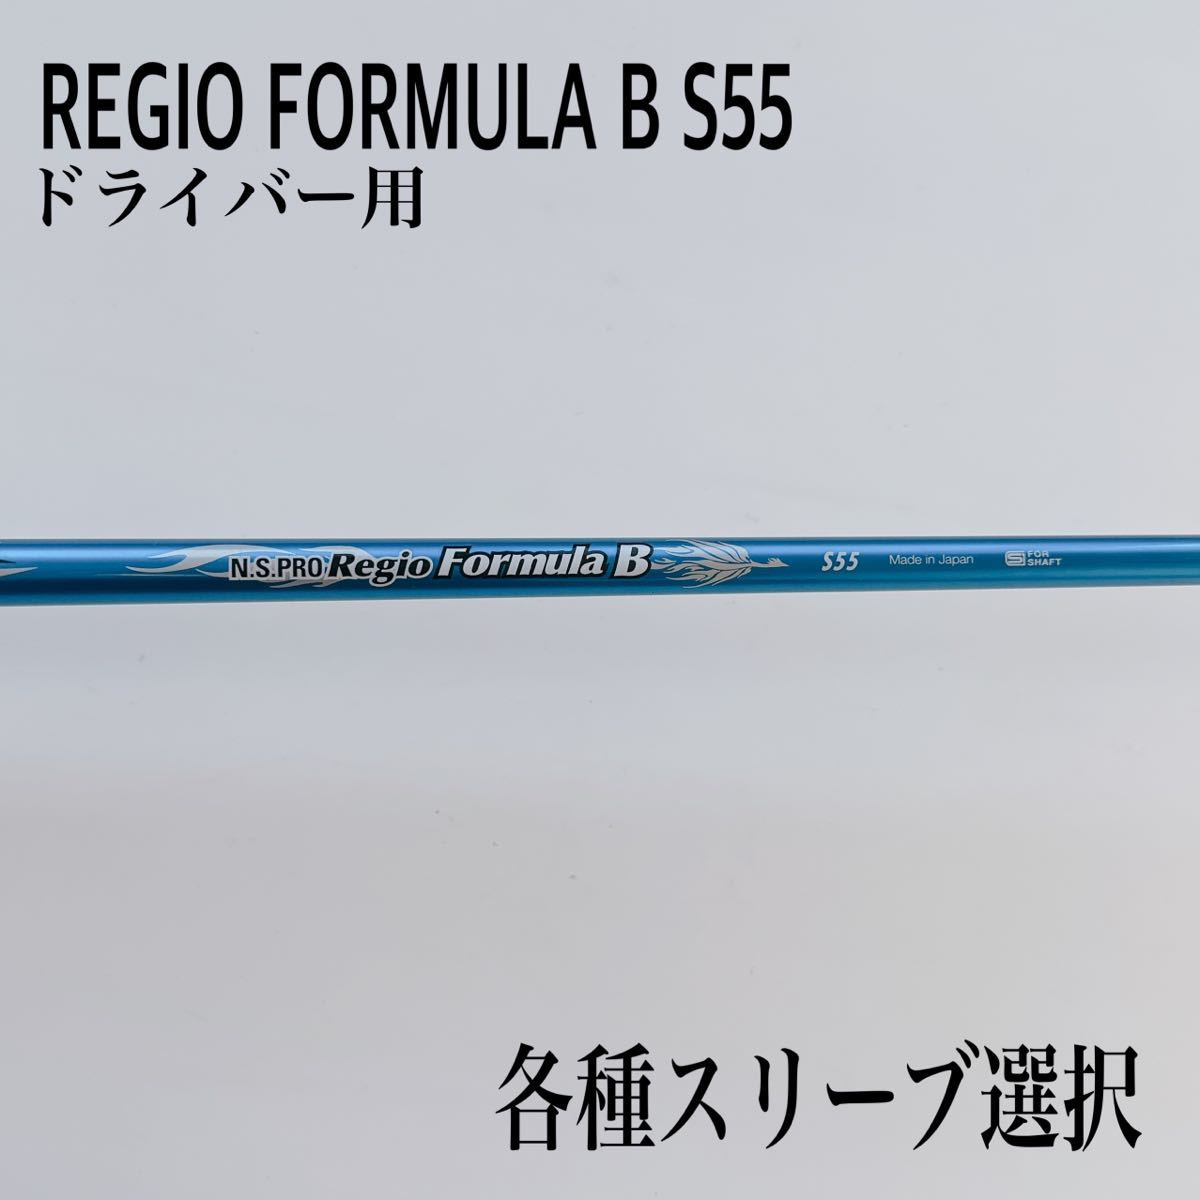 NS PRO Regio Formula M+ R55 1W ピン用 neuroid.uprrp.edu